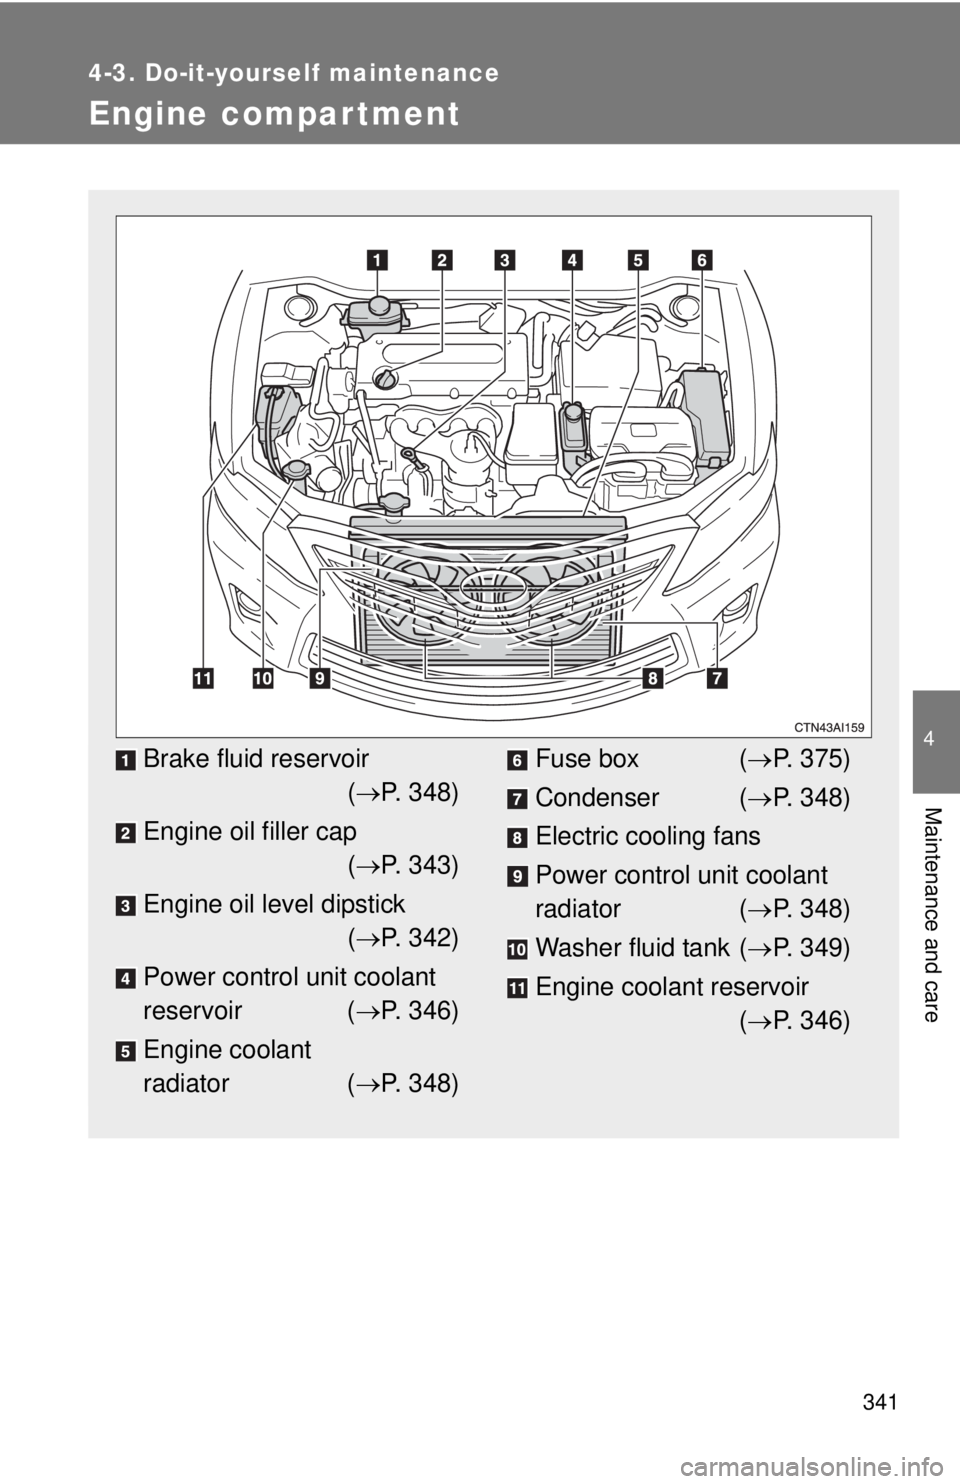 TOYOTA CAMRY HV 2011  Owners Manual 341
4-3. Do-it-yourself maintenance
4
Maintenance and care
Engine compar tment
Brake fluid reservoir( P. 348)
Engine oil filler cap ( P. 343)
Engine oil level dipstick ( P. 342)
Power control